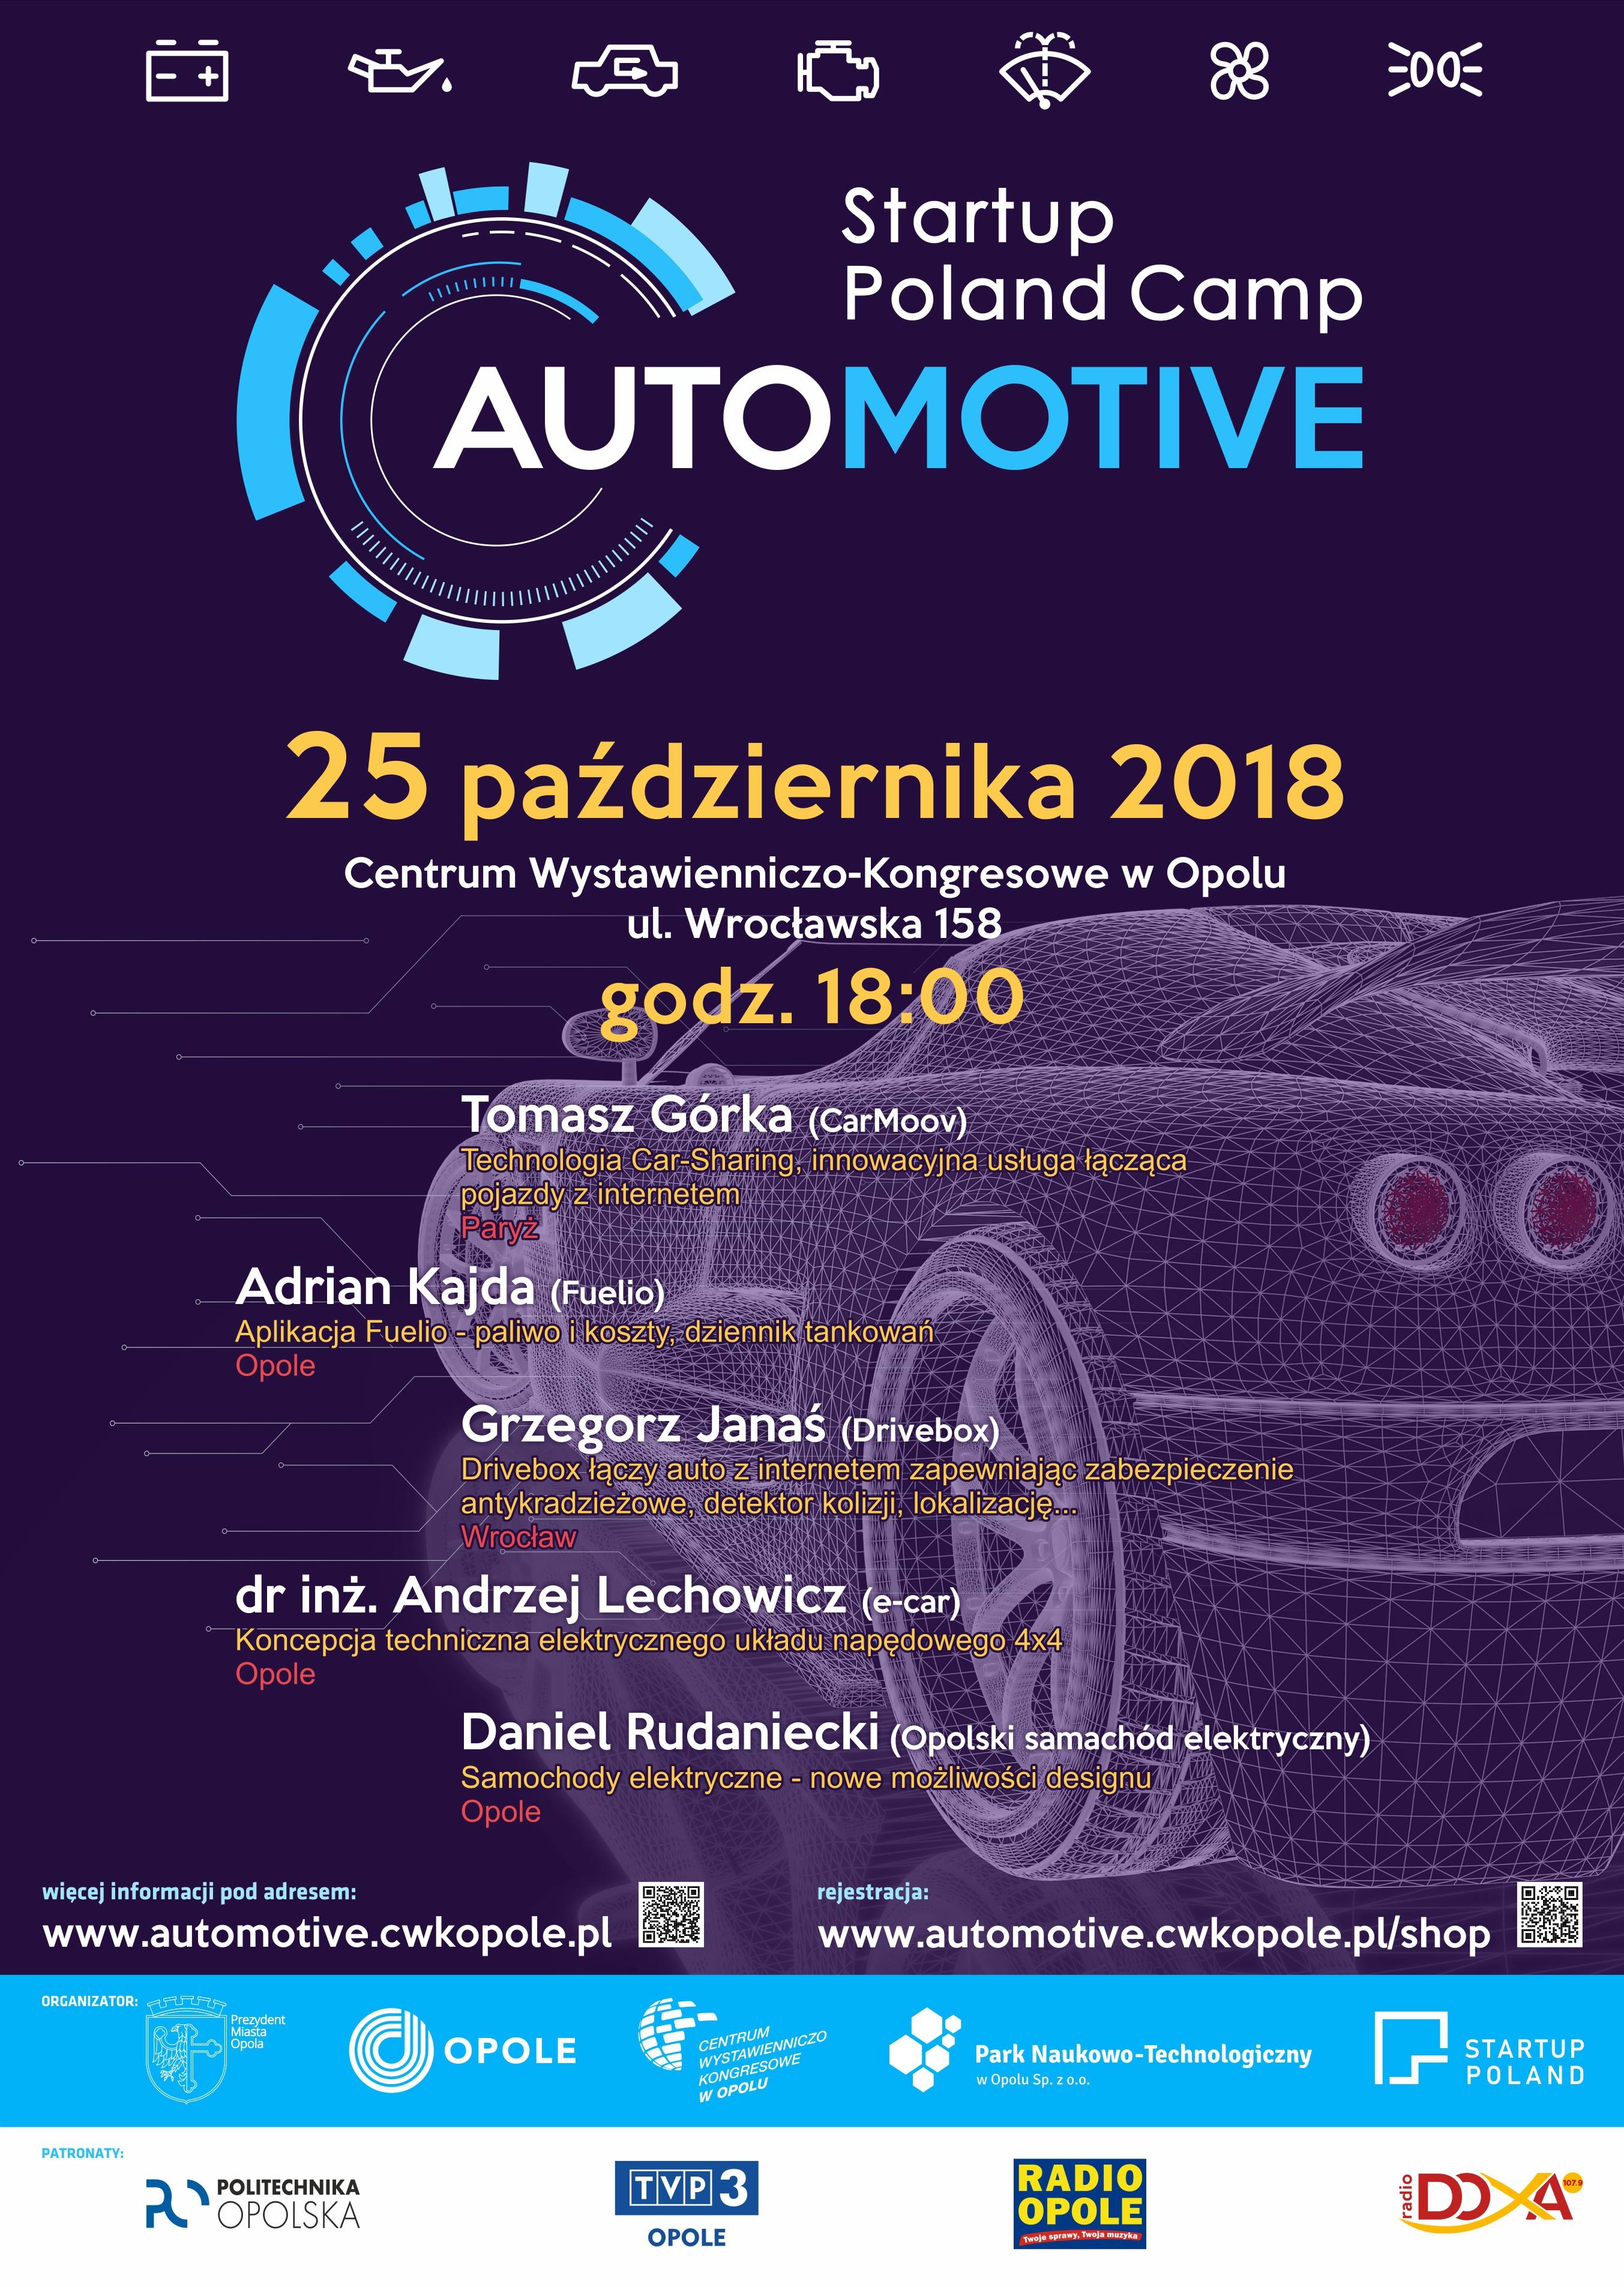 Startup-Poland-Camp-Automotive-program